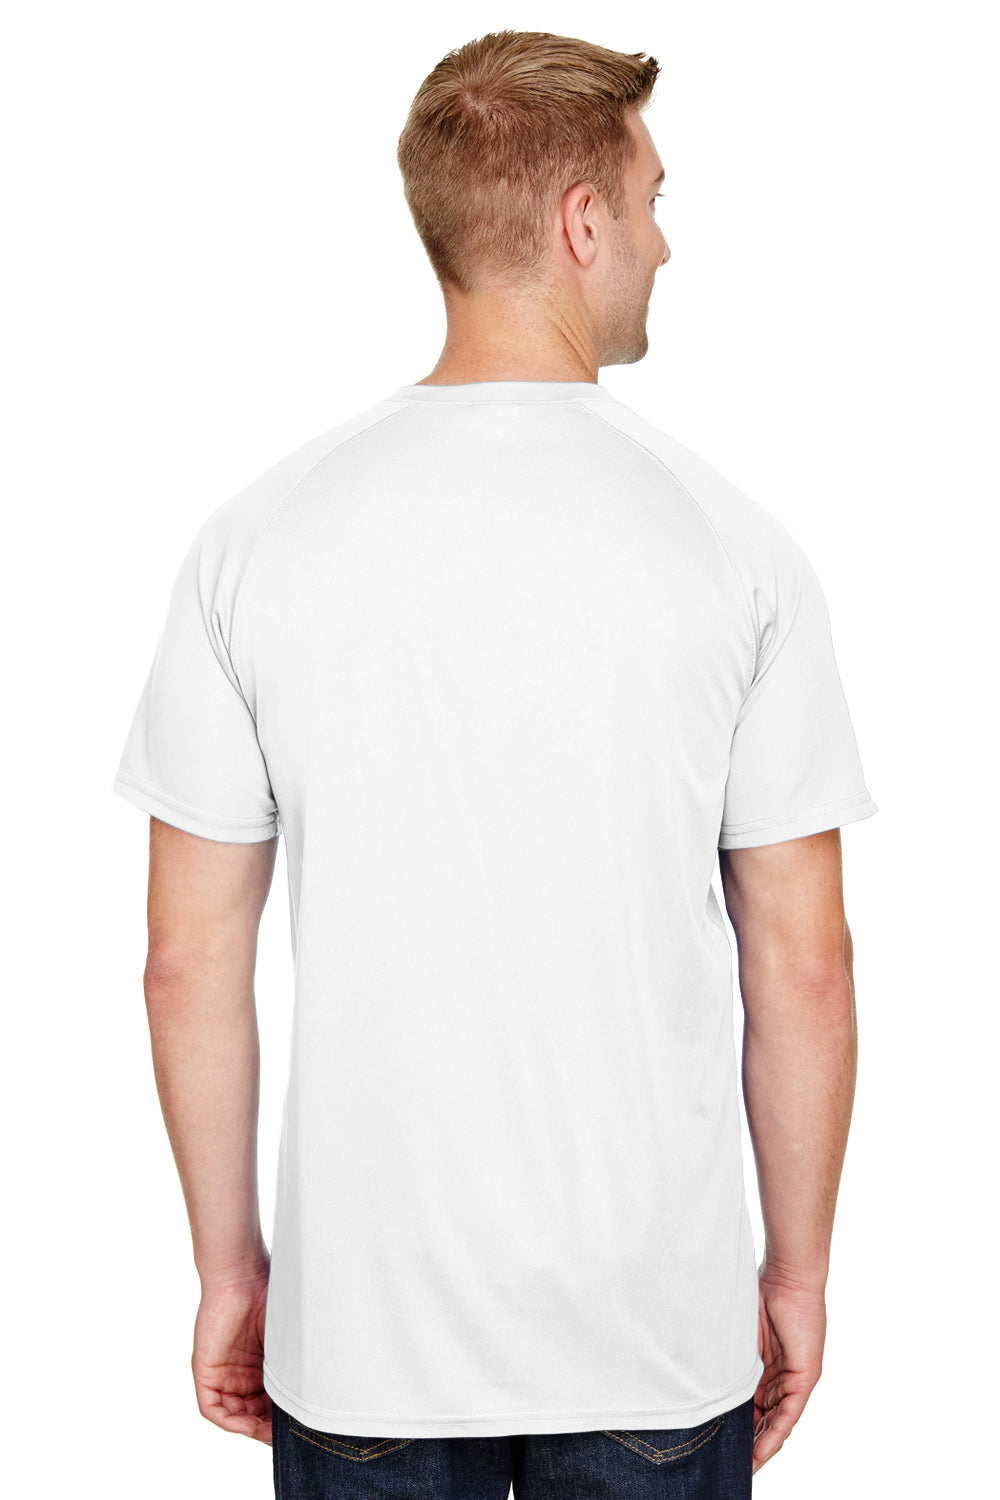 Augusta Sportswear AG1565 Mens Attain 2 Moisture Wicking Button Short Sleeve Baseball Jersey White Model Back